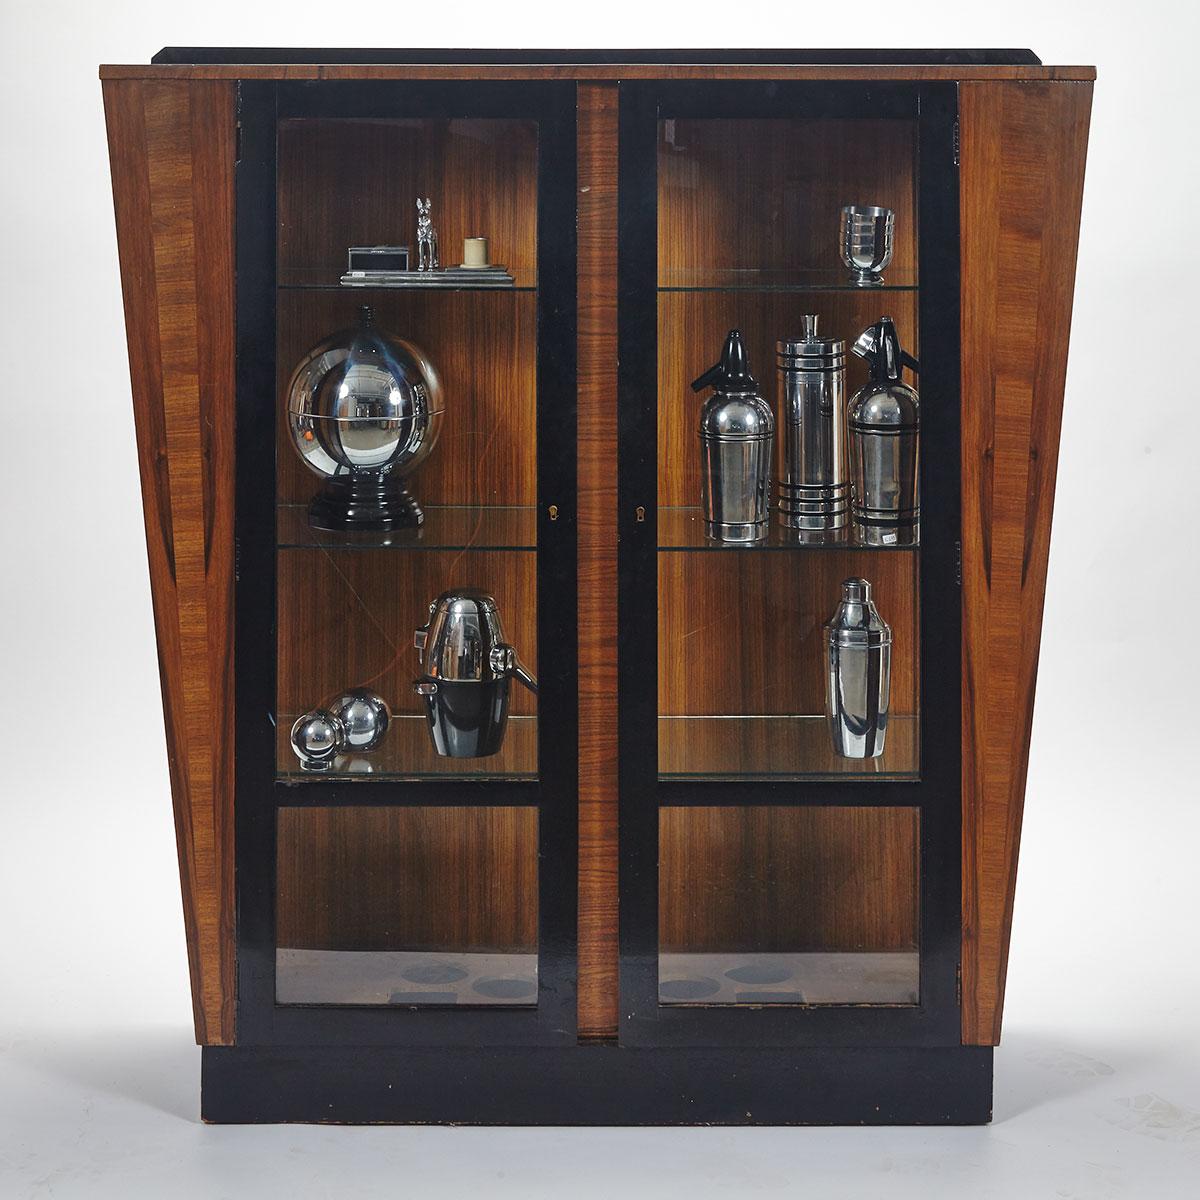 Art Deco Style Glazed Mahogany and Ebonized Wood Cabinet, mid 20th century